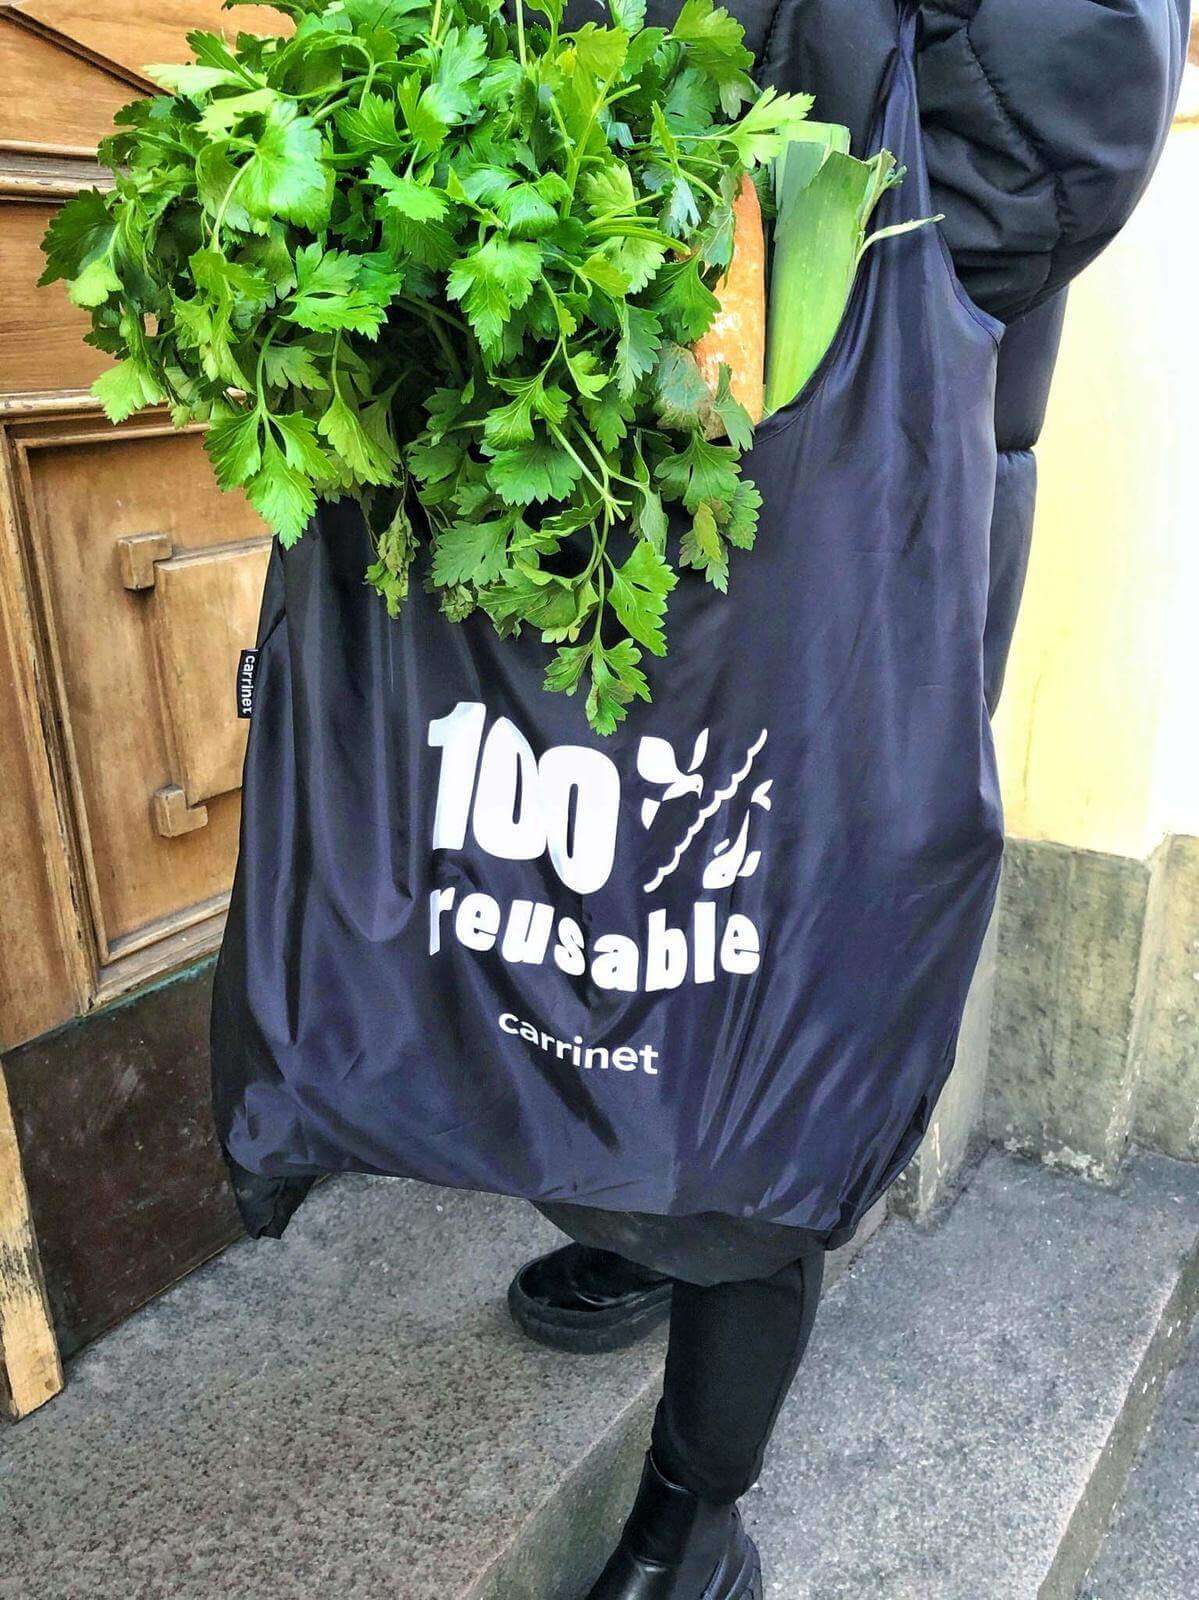 Shop Bag - "100% Reusable" BLÅ Carrinet shop